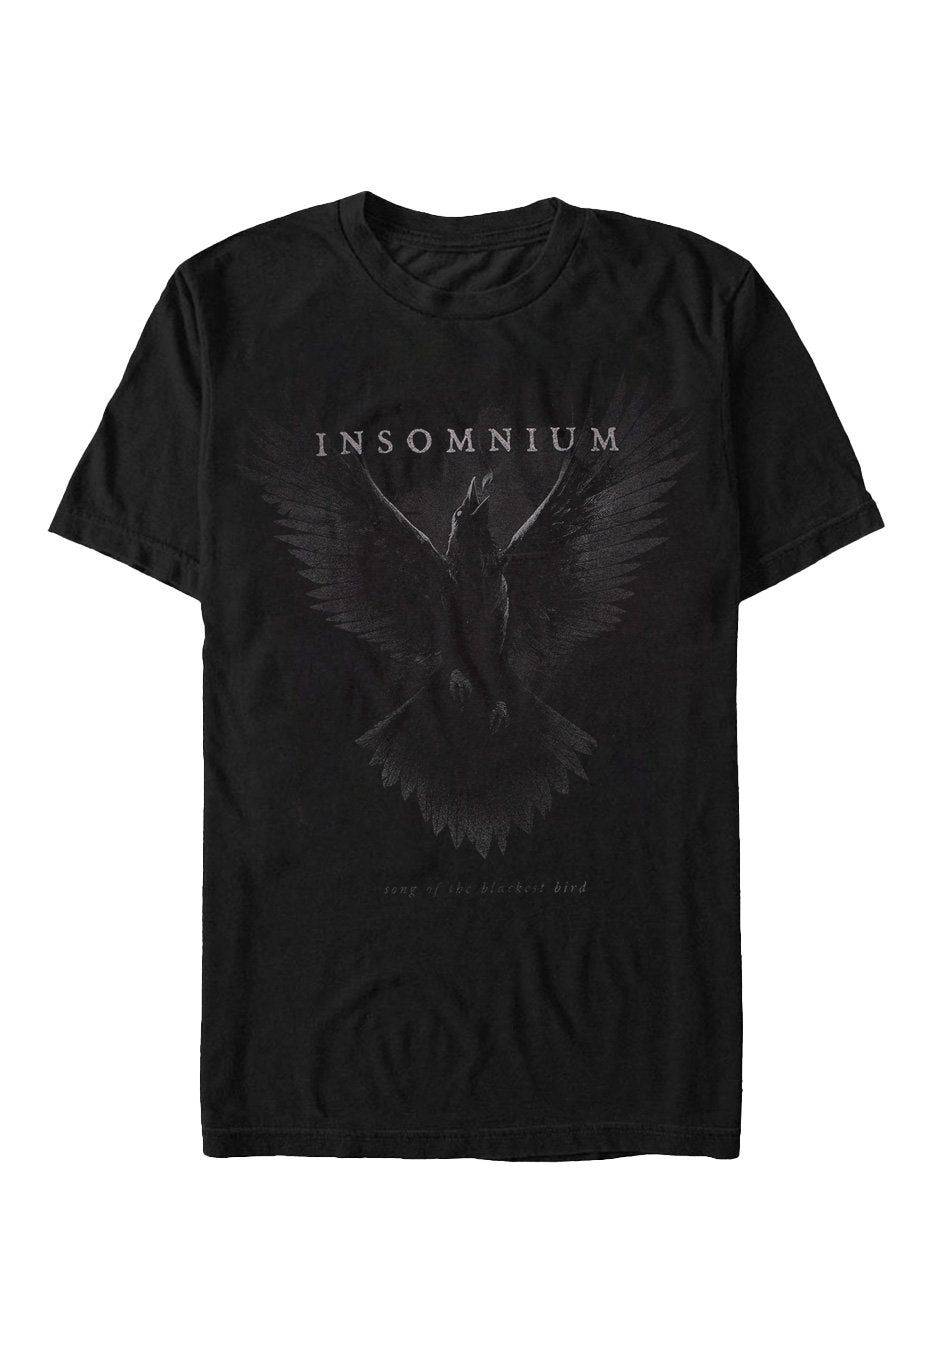 Insomnium - The Blackest Bird - T-Shirt